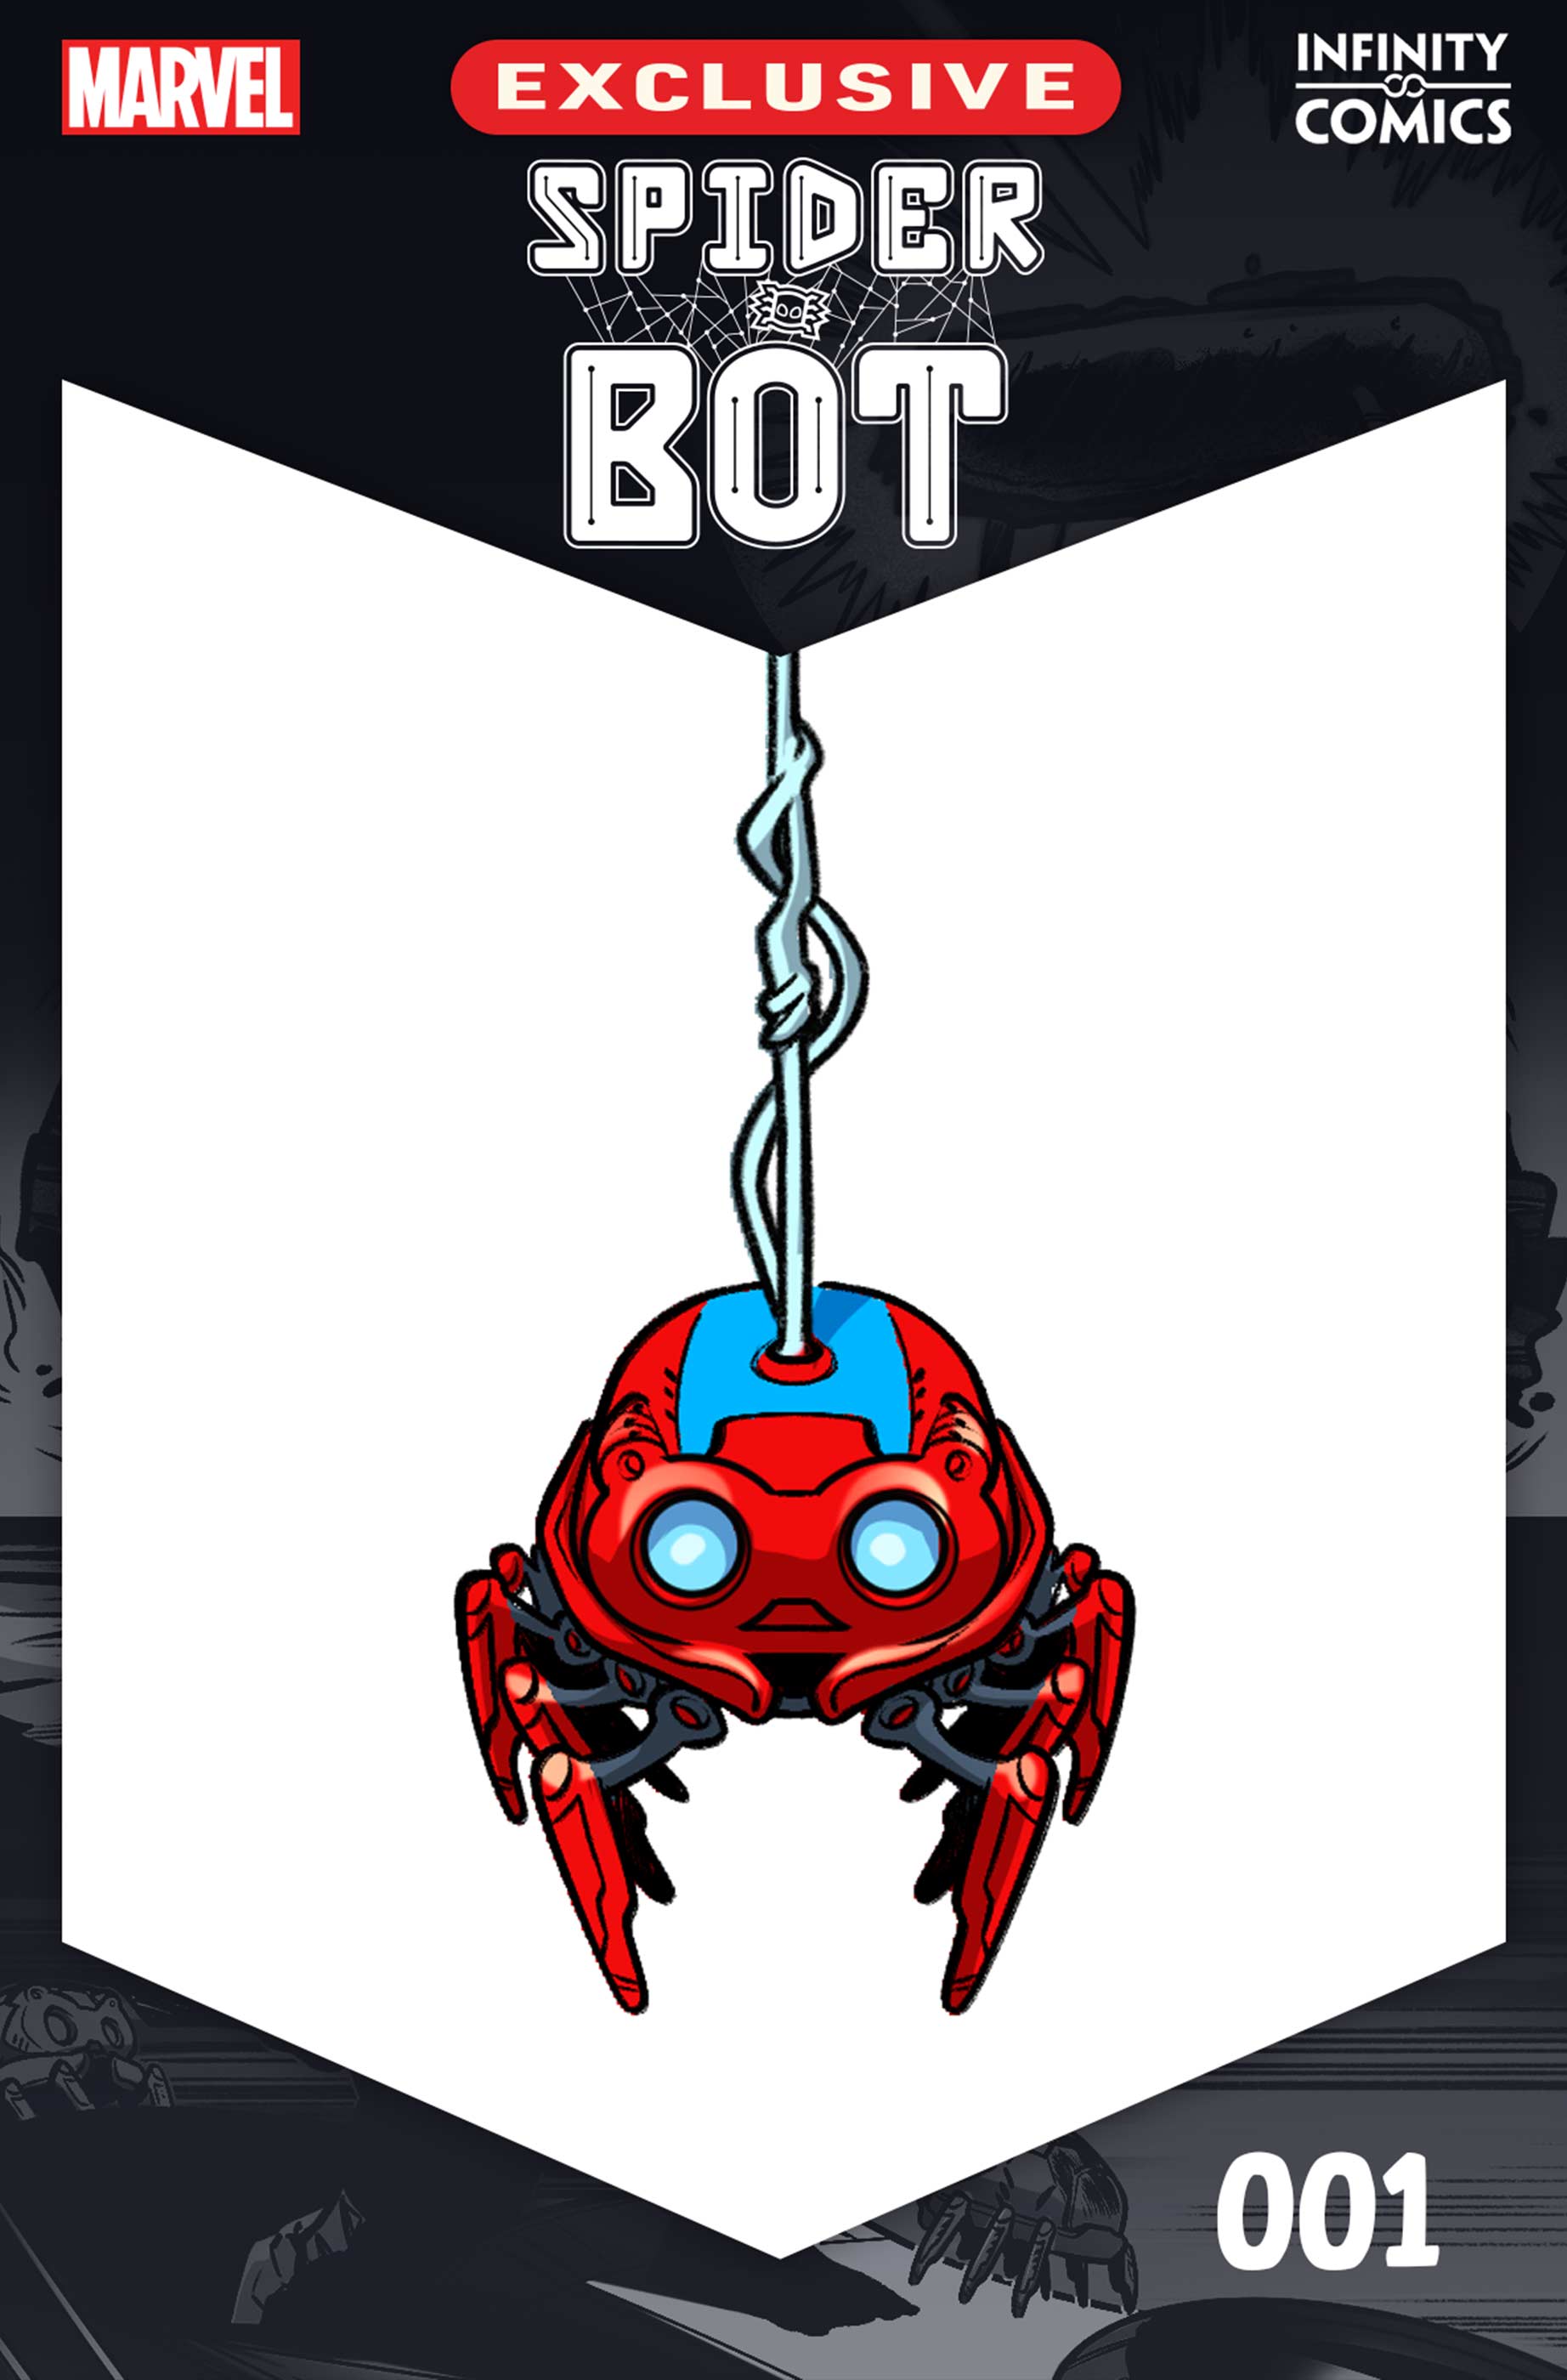 Bot comics free